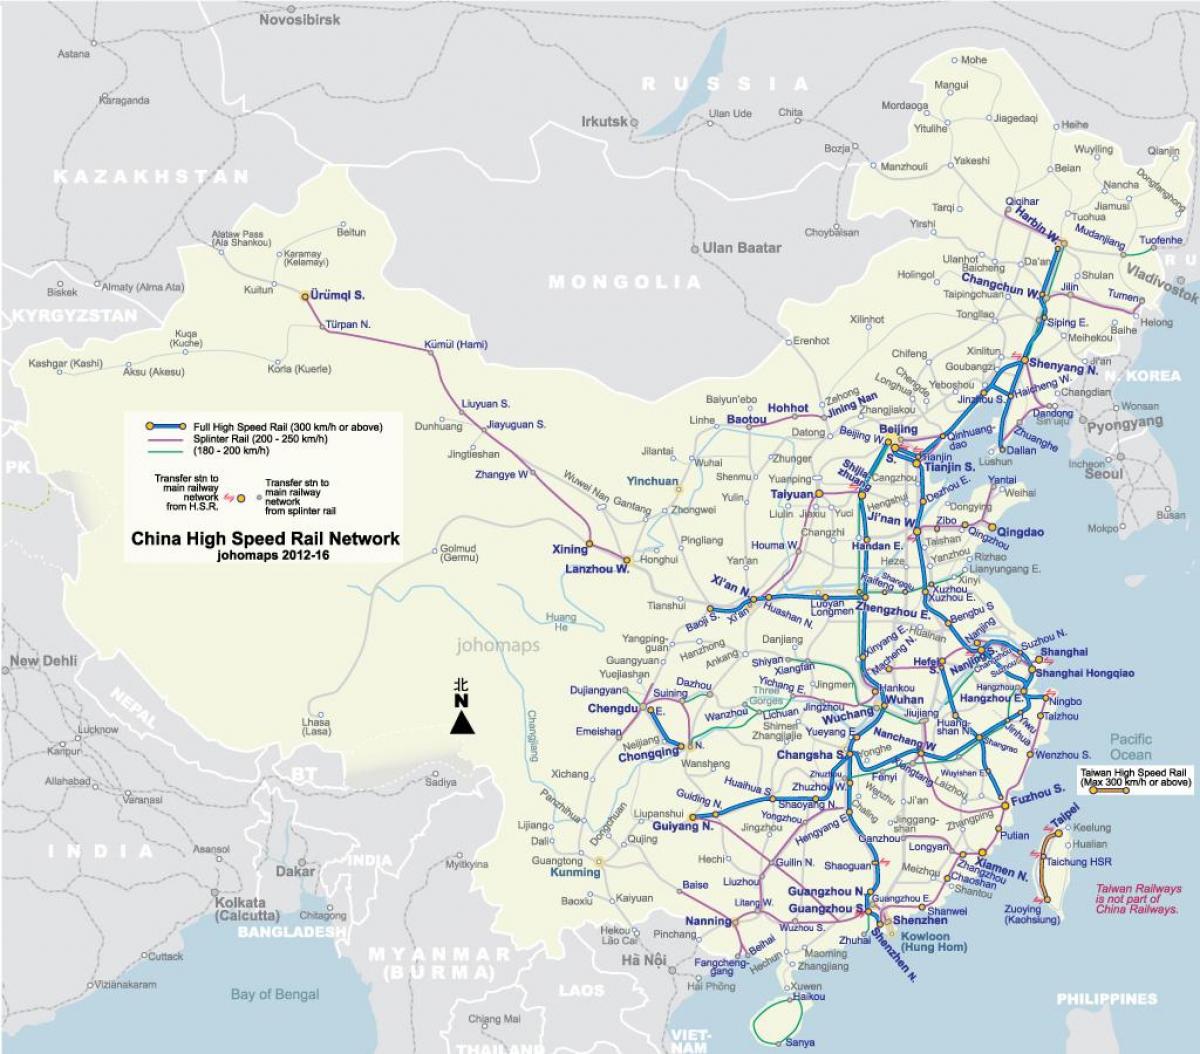 ferroviaire à grande vitesse de la carte de la Chine